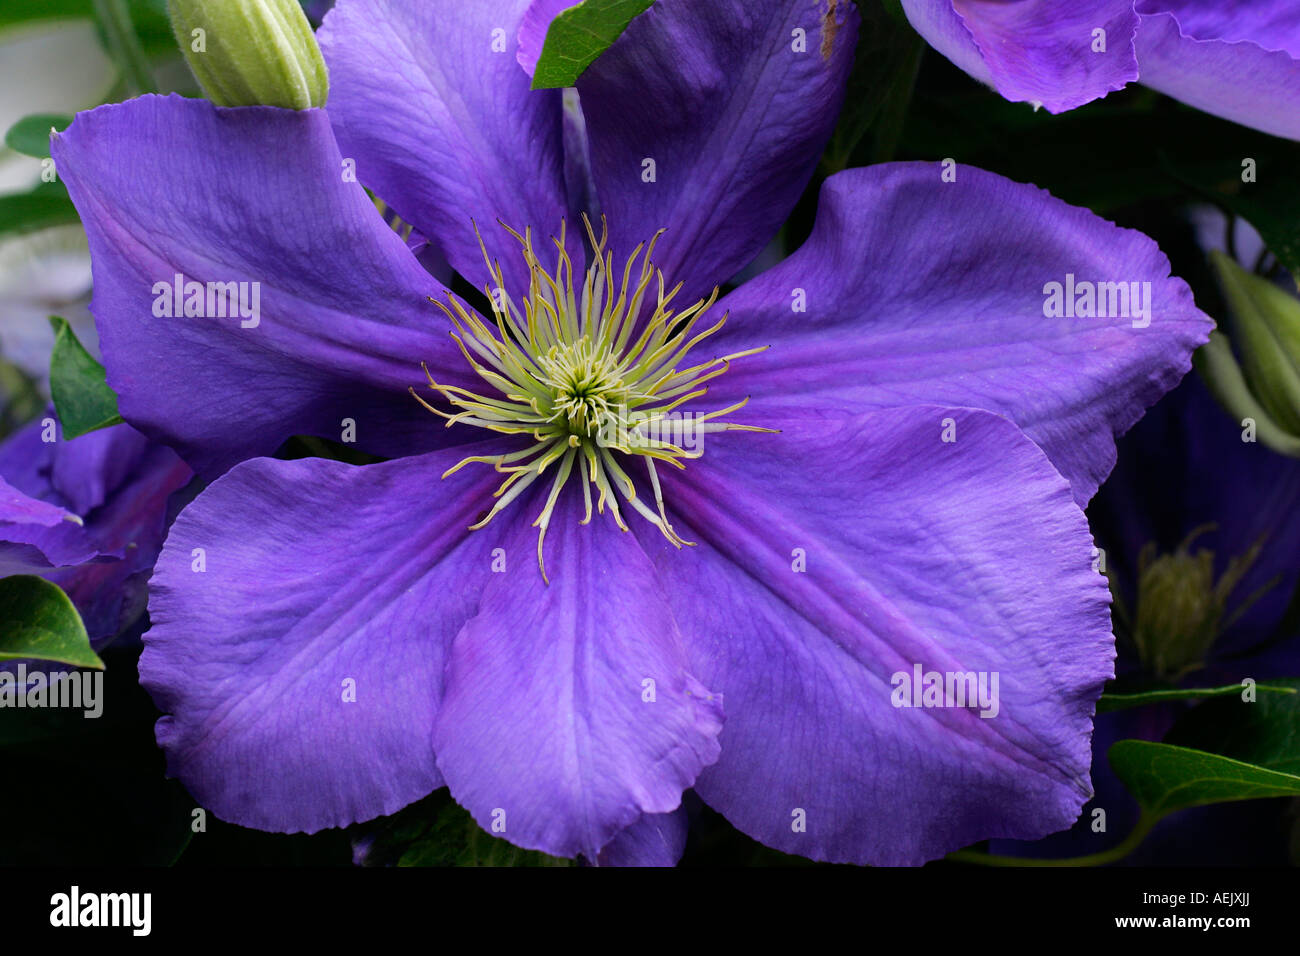 Flowering clematis (Clematis) Stock Photo